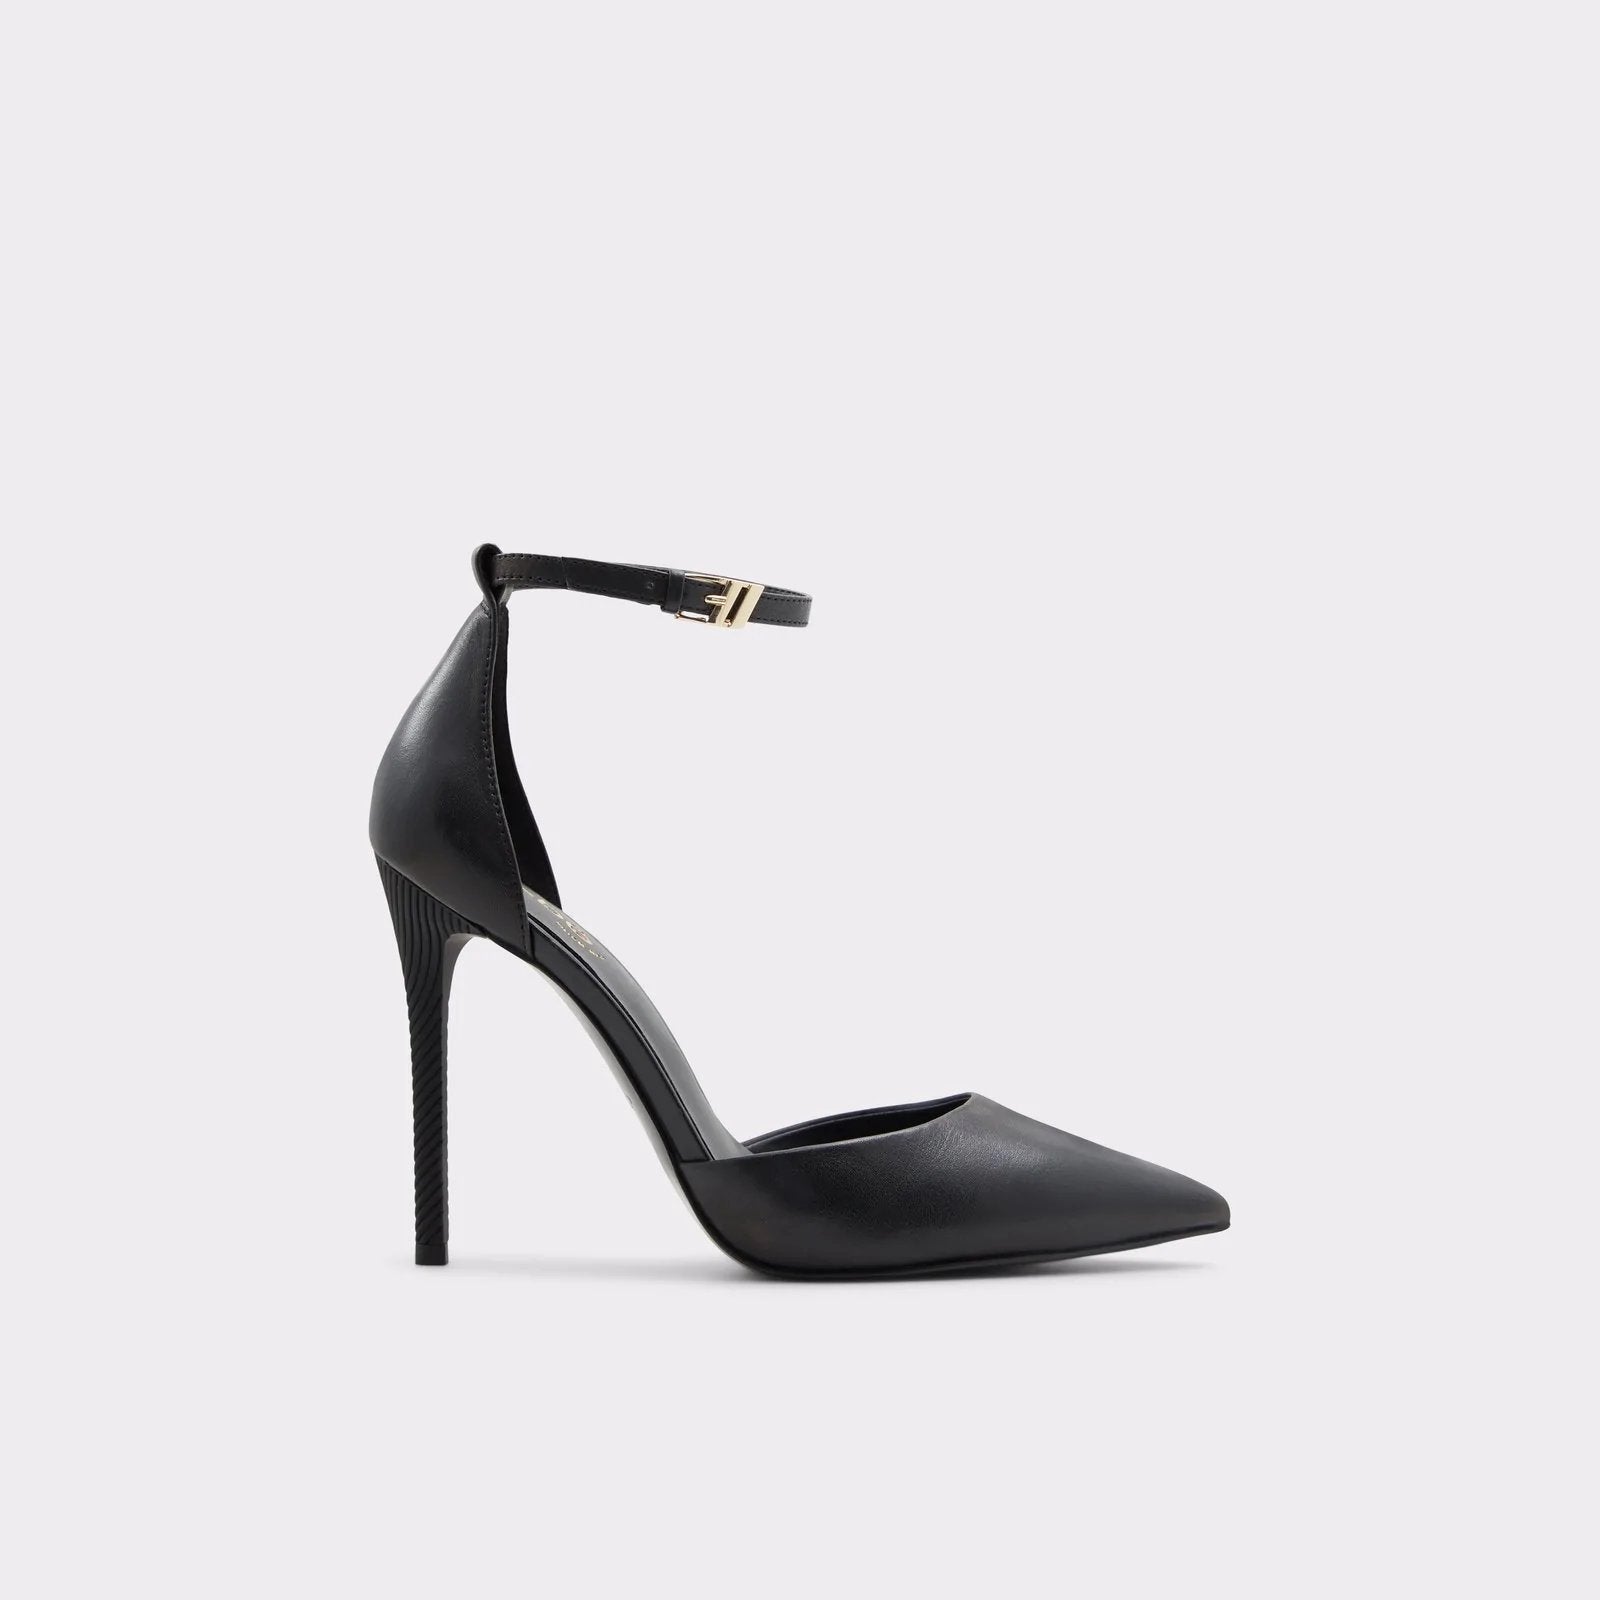 Latest Designer Flat Sandals Women - Chappals - Shop Stylish & Affordable  Online